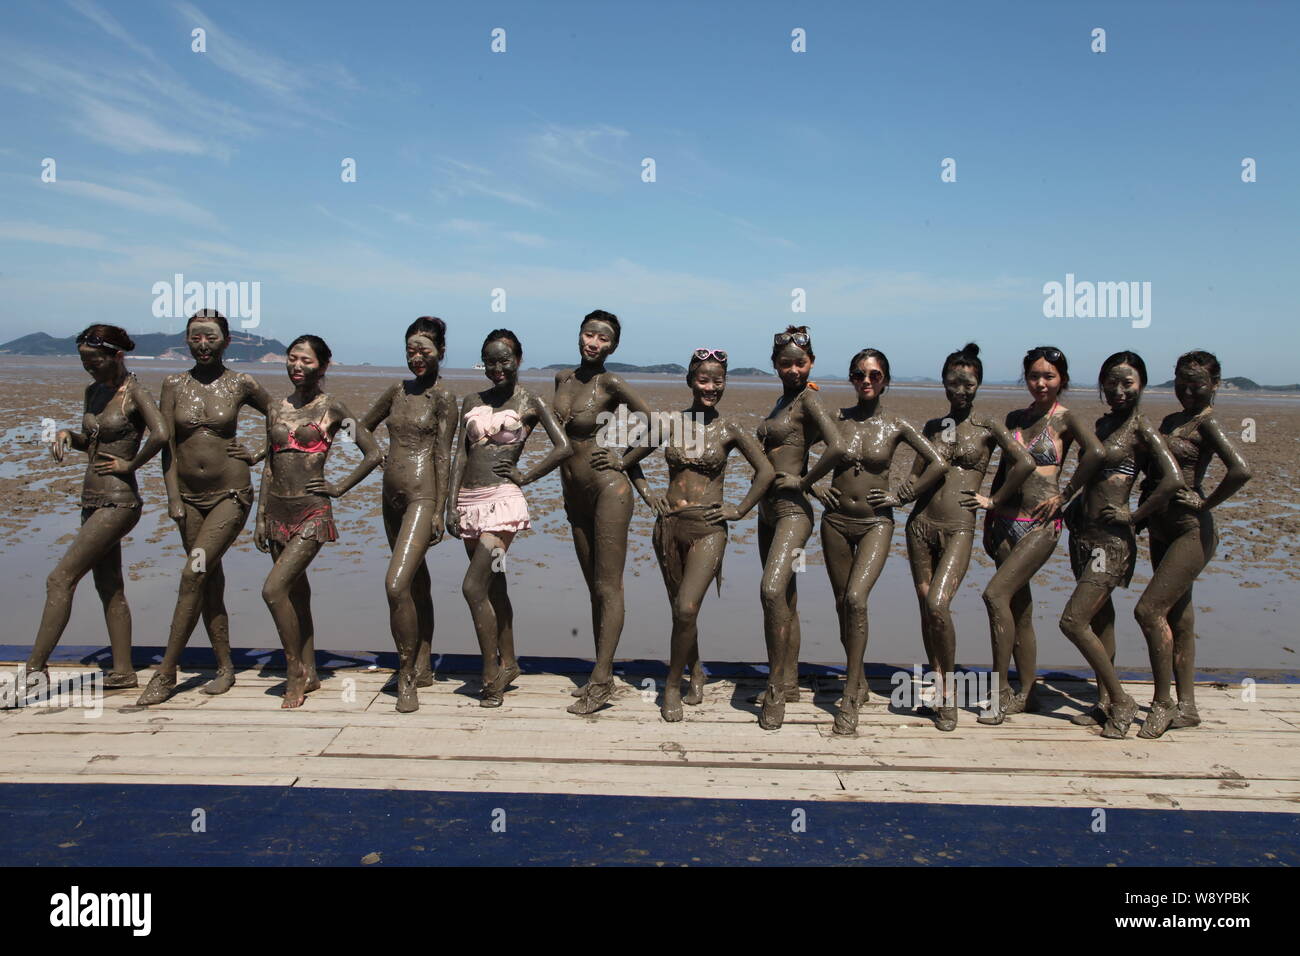  Miss Jr. nudist Getty Images